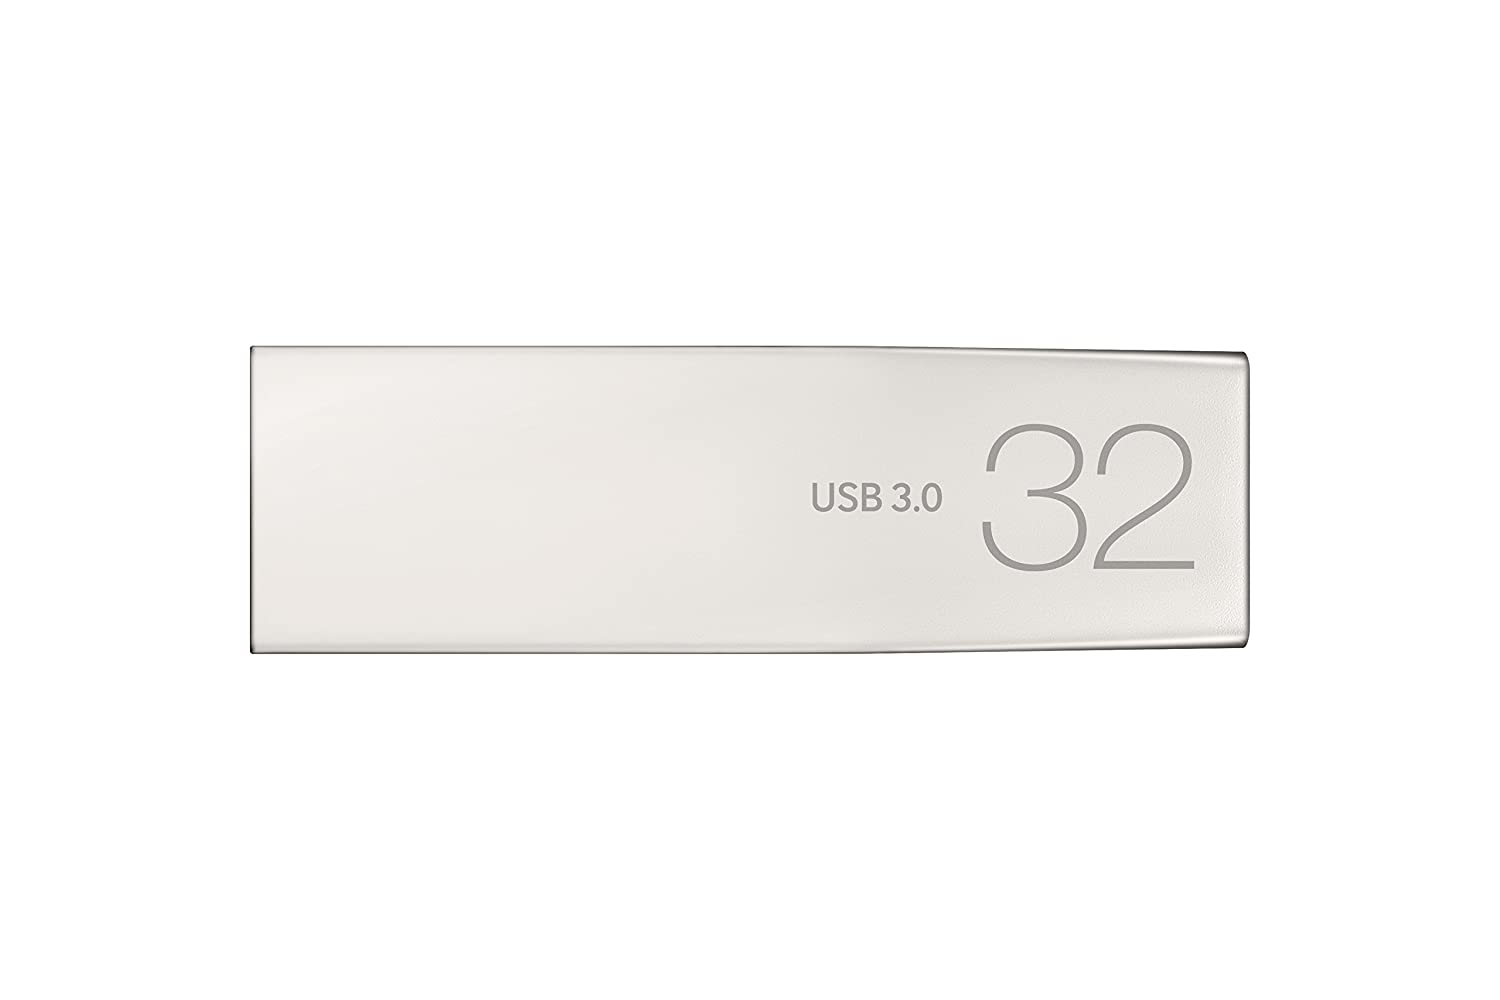 Samsung 8GB, 16GB, 32GB, 64GB Metal USB 3.0 Flash Drive Pendrive BAR Plus | KOFshop.com